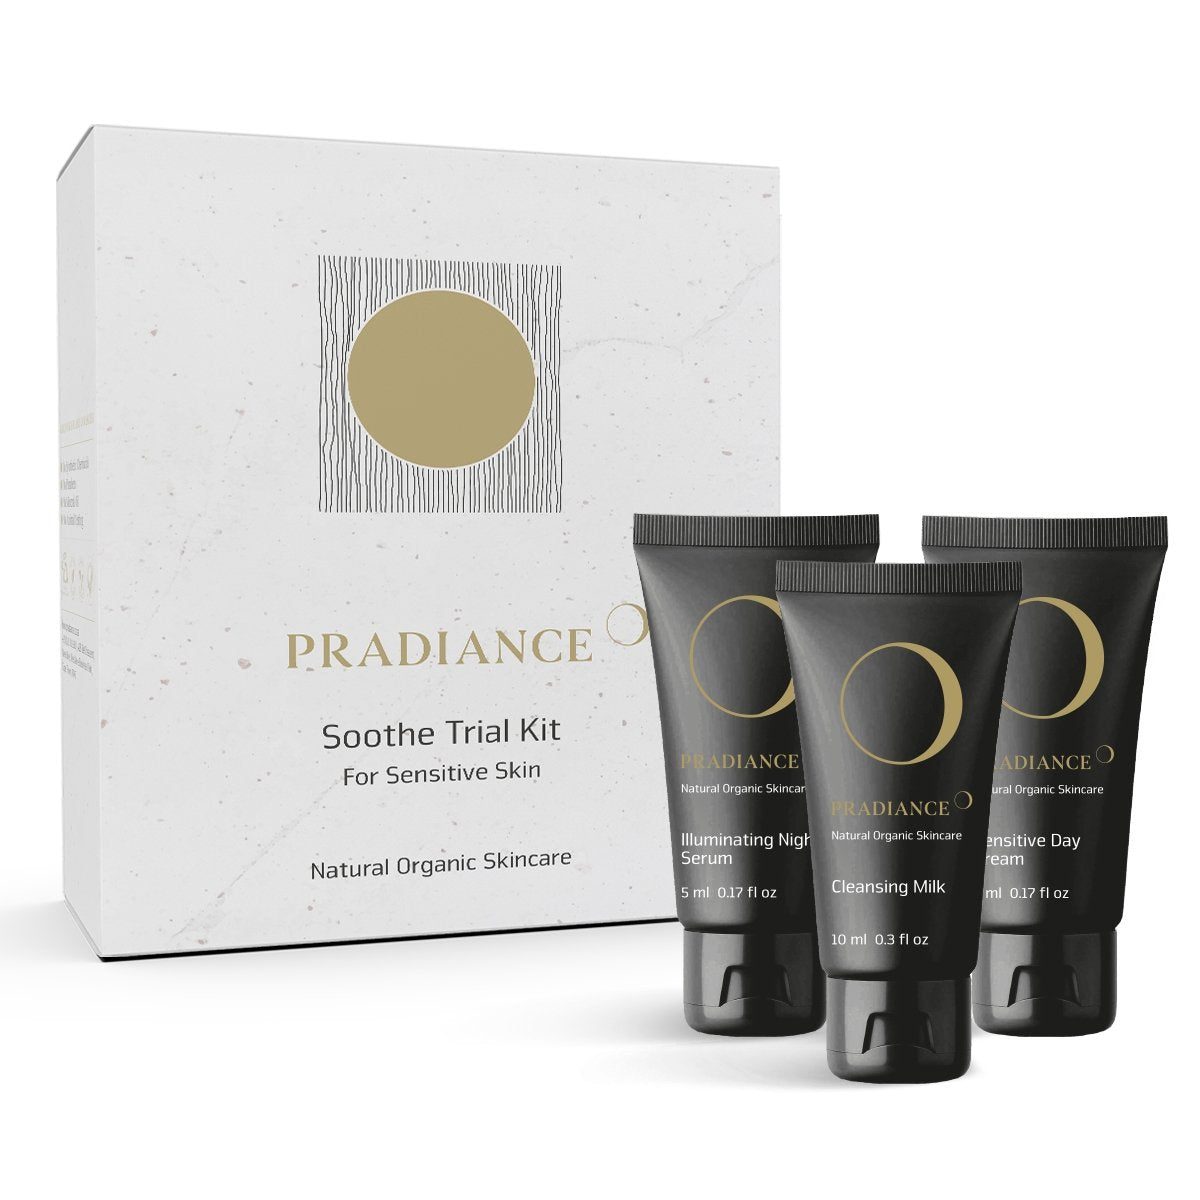 Soothe Trial Kit (Sensitive Skin) - Pradiance